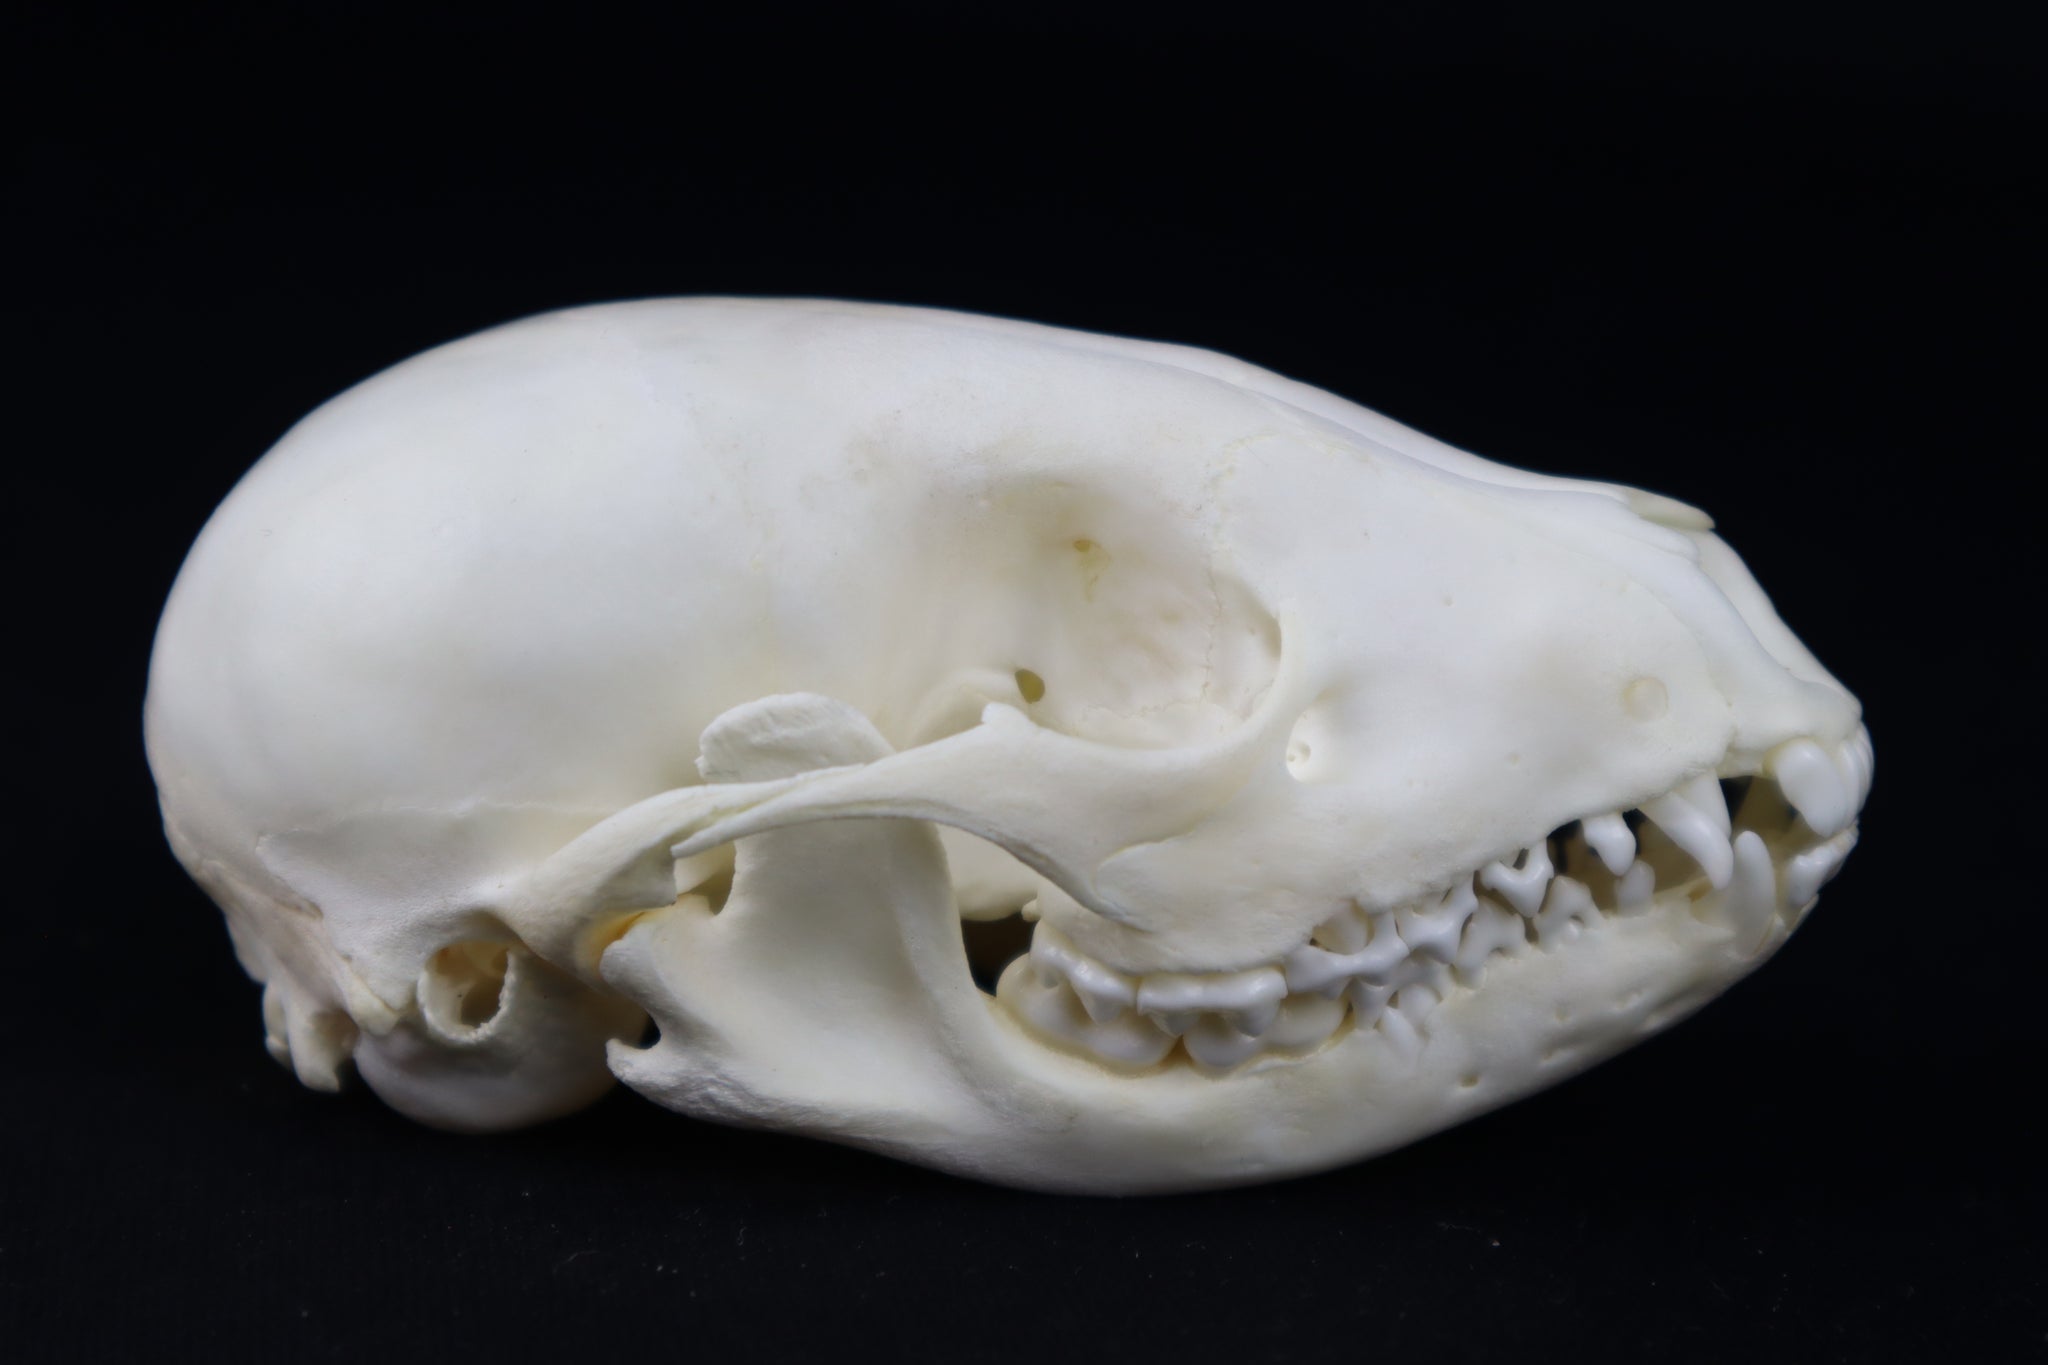 Juvenile Raccoon Skull